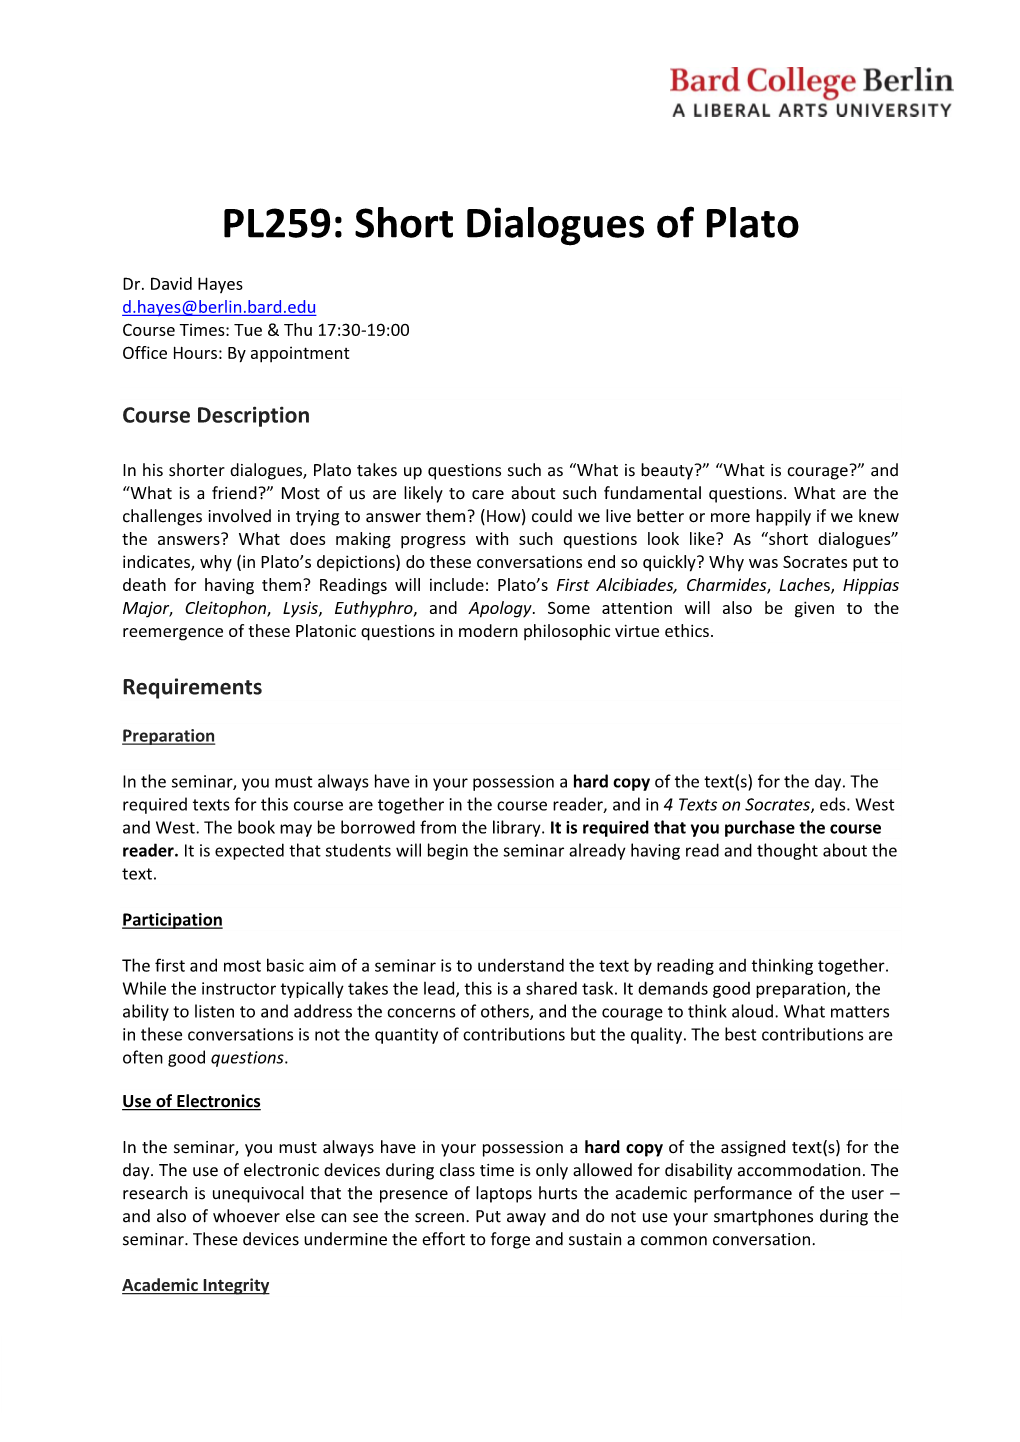 Short Dialogues of Plato